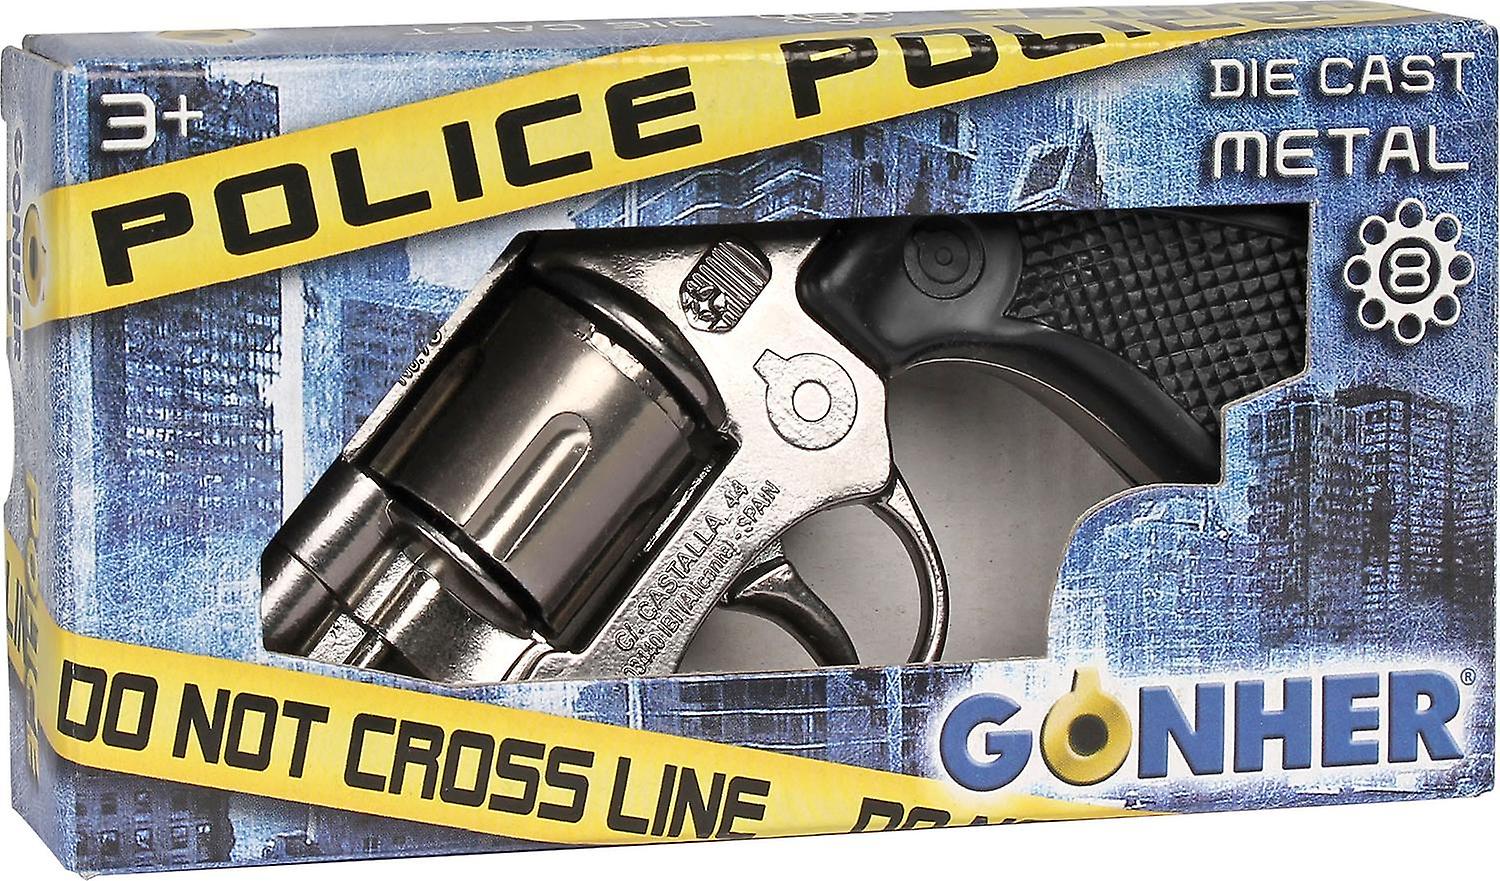 Police 357 Magnum 8-Shot Toy Cap Gun - Chrome Finish, 33, 0033